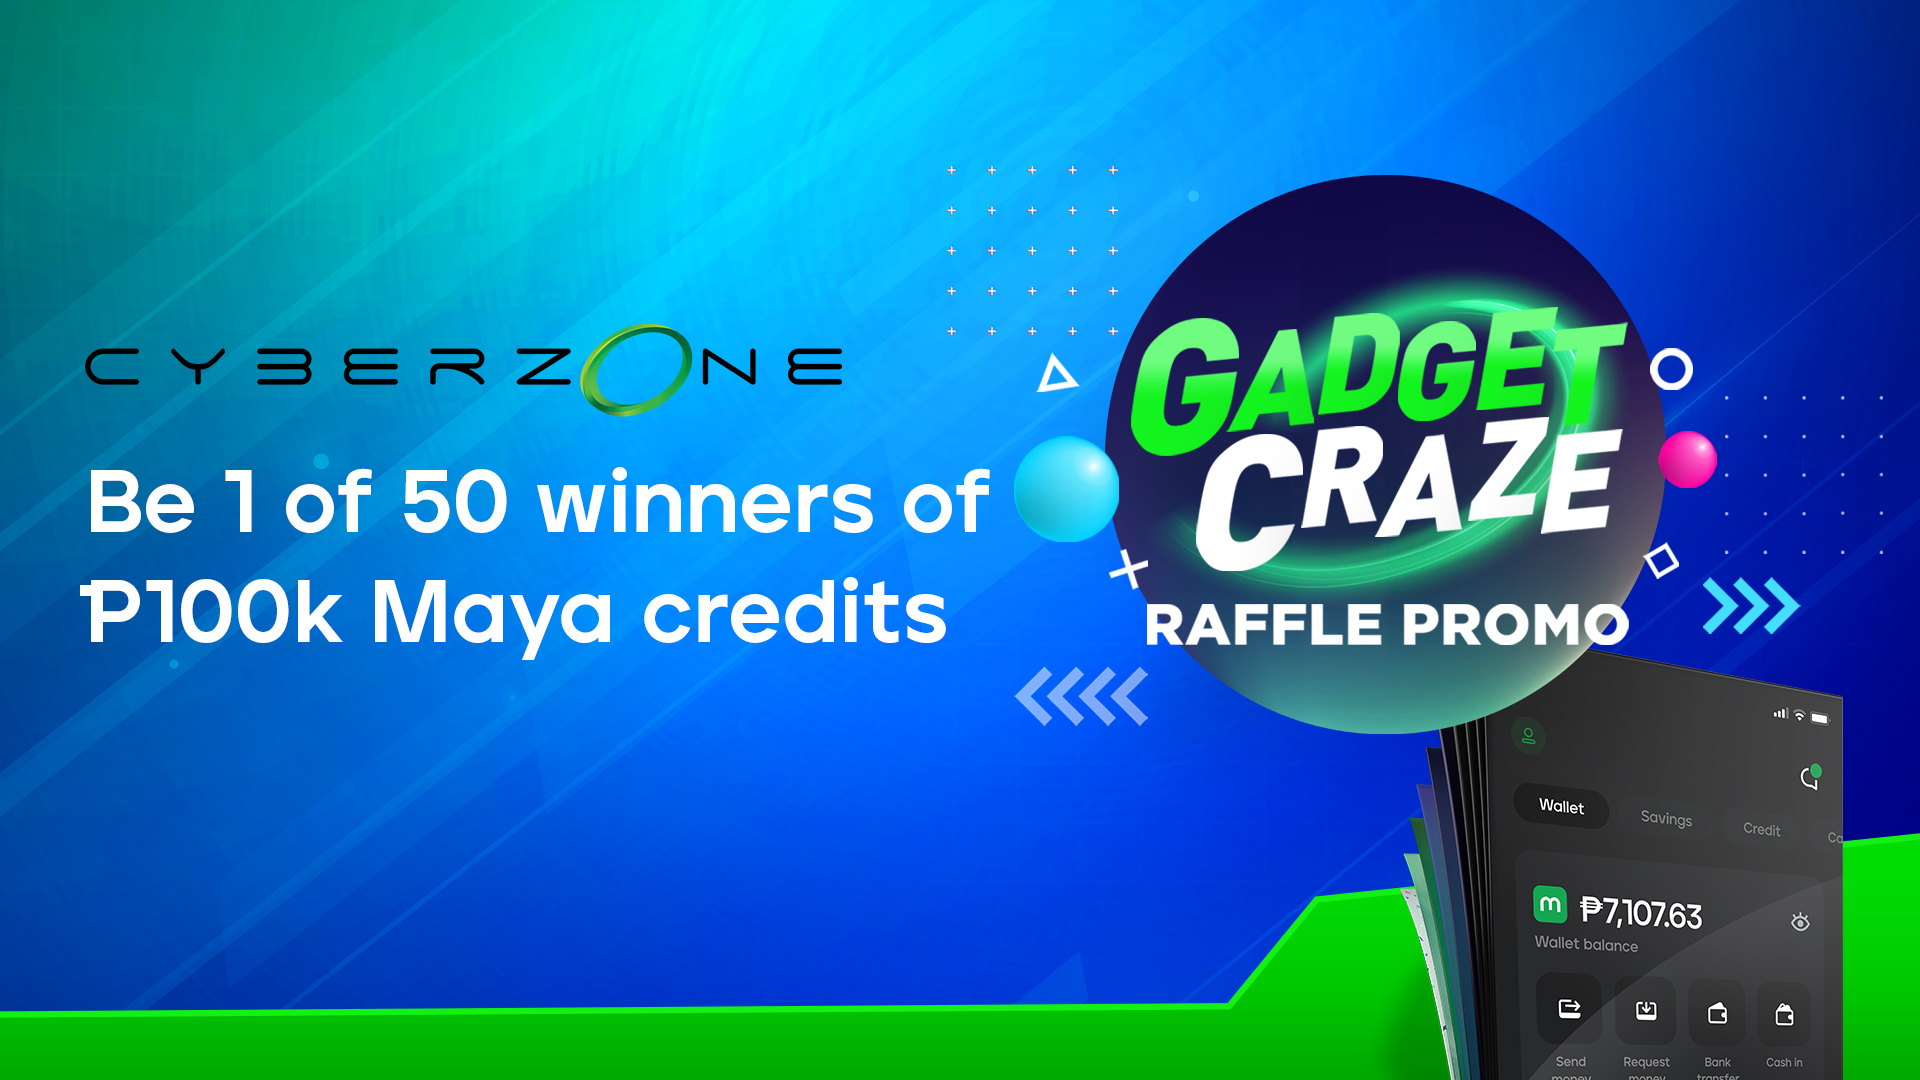 #ScanToPay at SM Cyberzone & win prizes